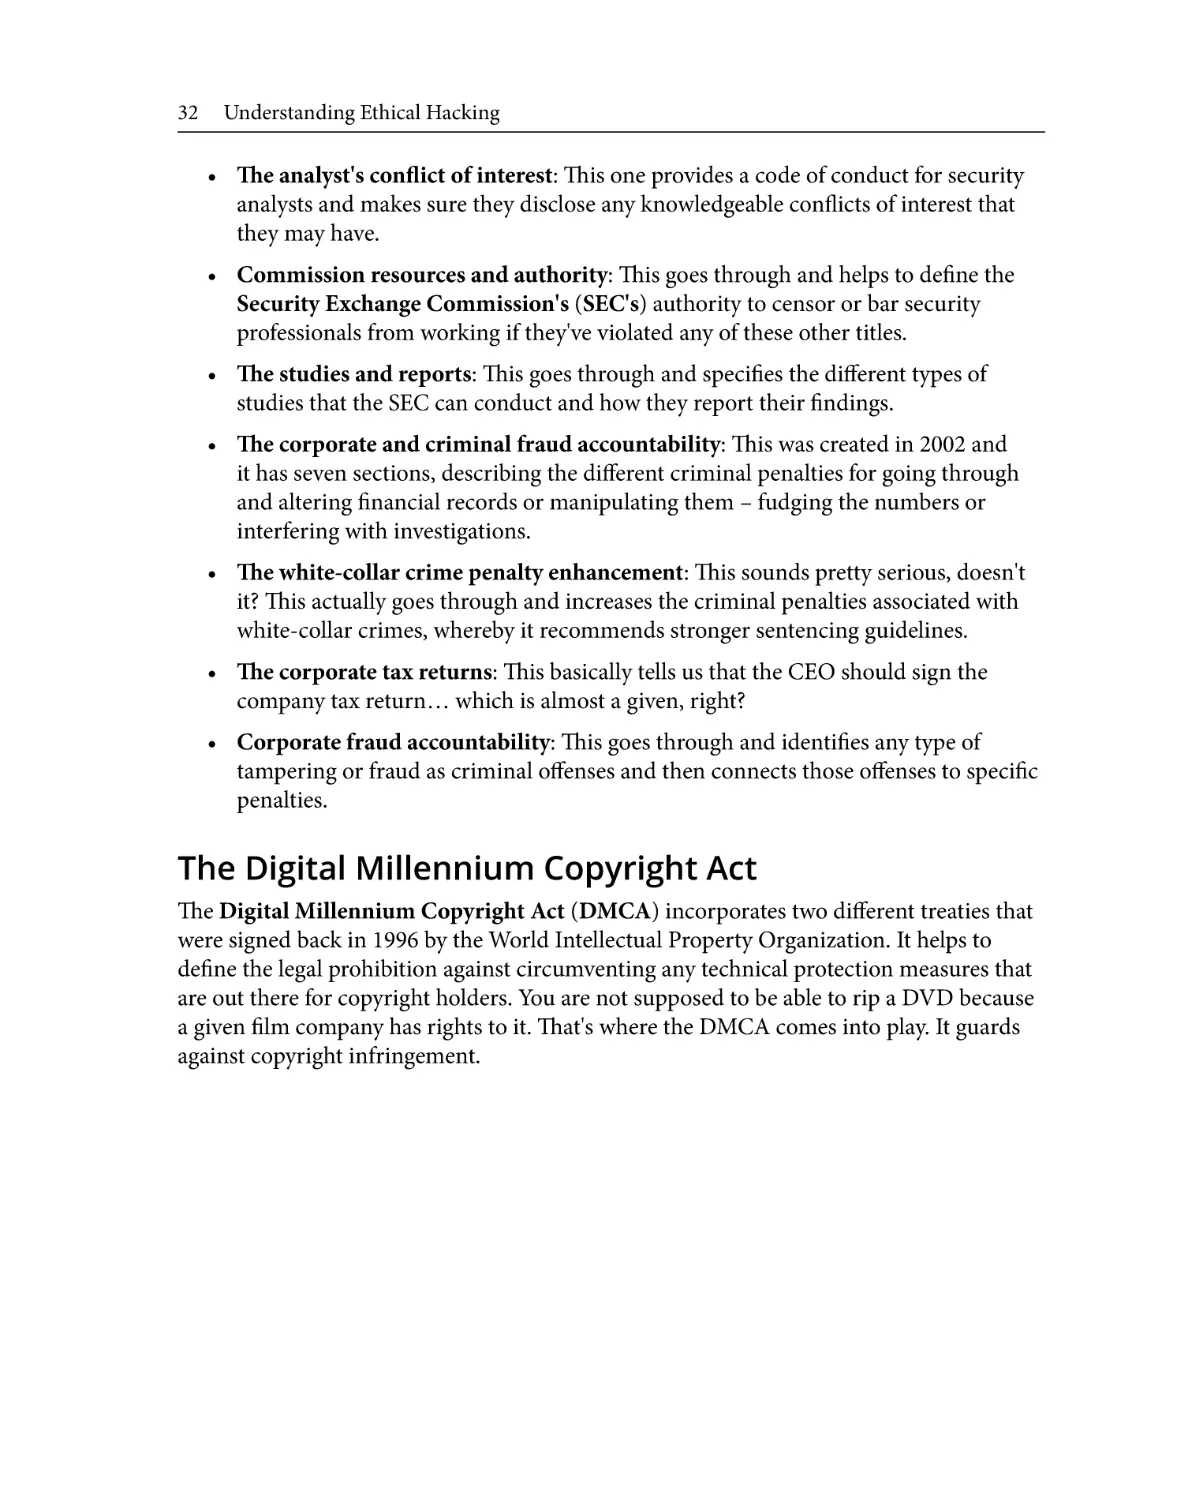 The Digital Millennium Copyright Act